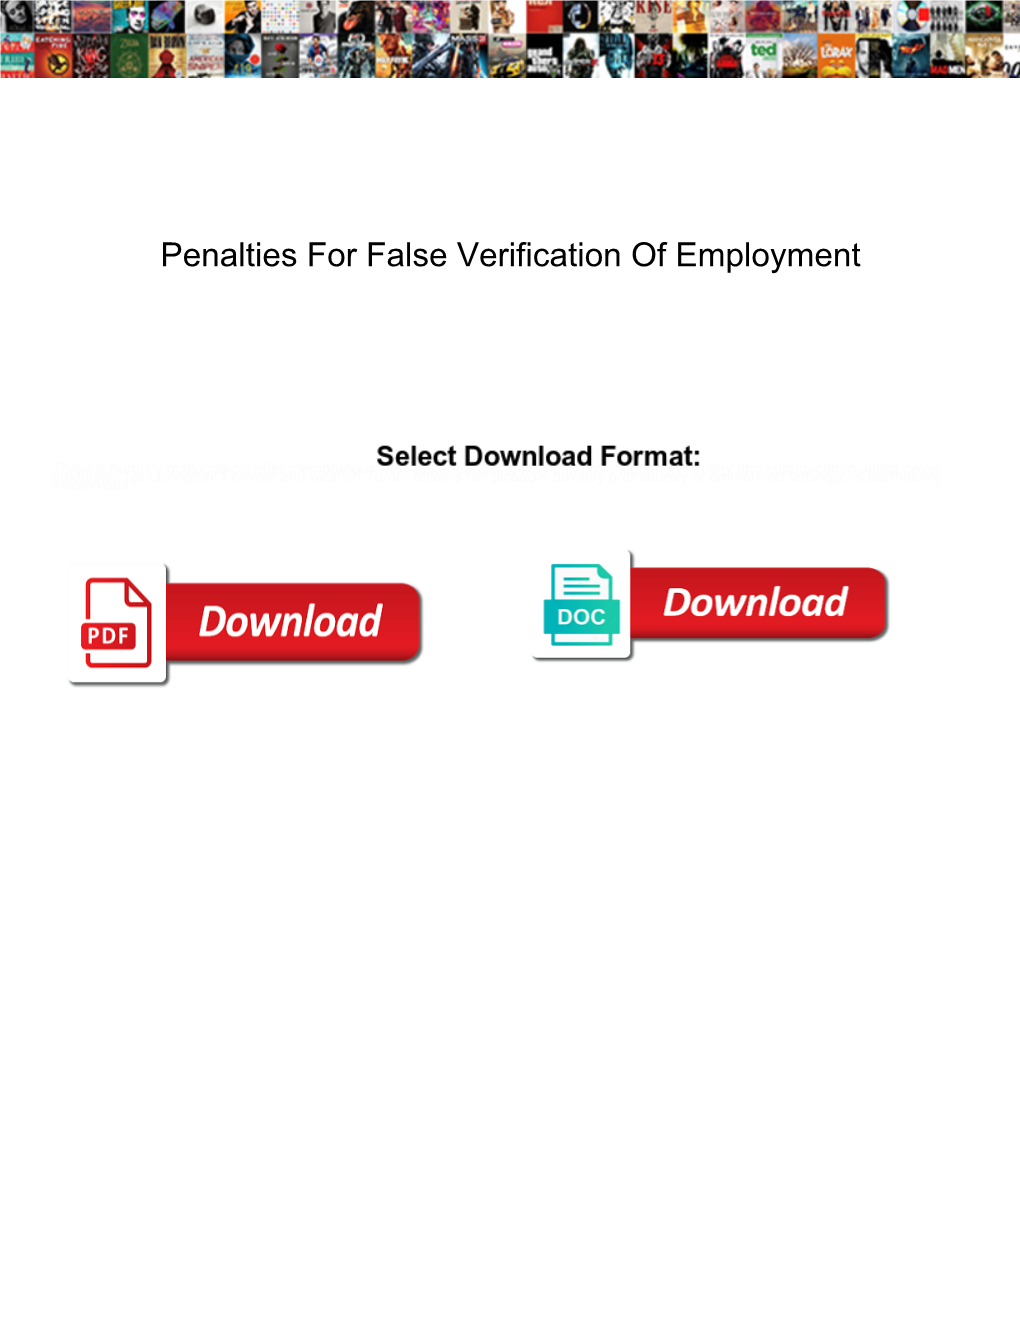 Penalties for False Verification of Employment